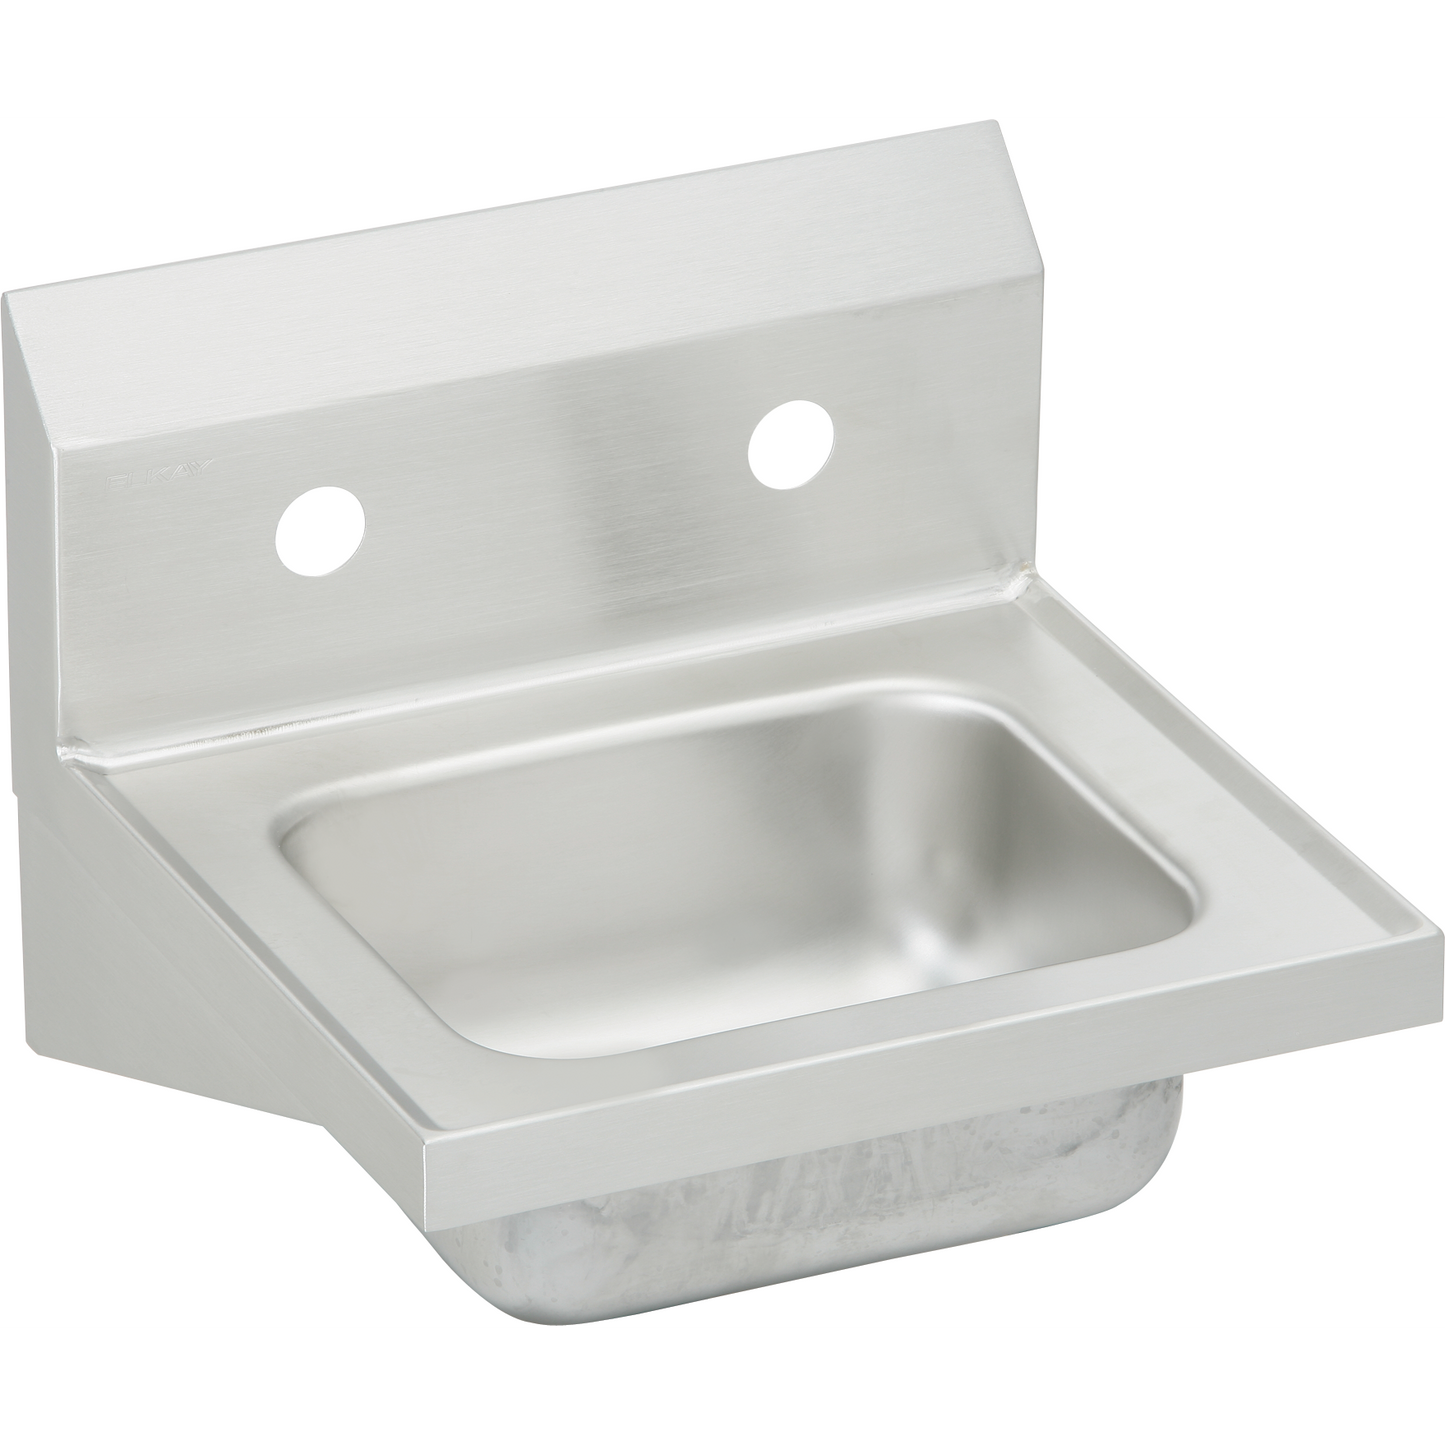 Elkay Stainless Steel 16-3/4" x 15-1/2" x 13" Single Bowl Wall Hung Handwash Sink Kit